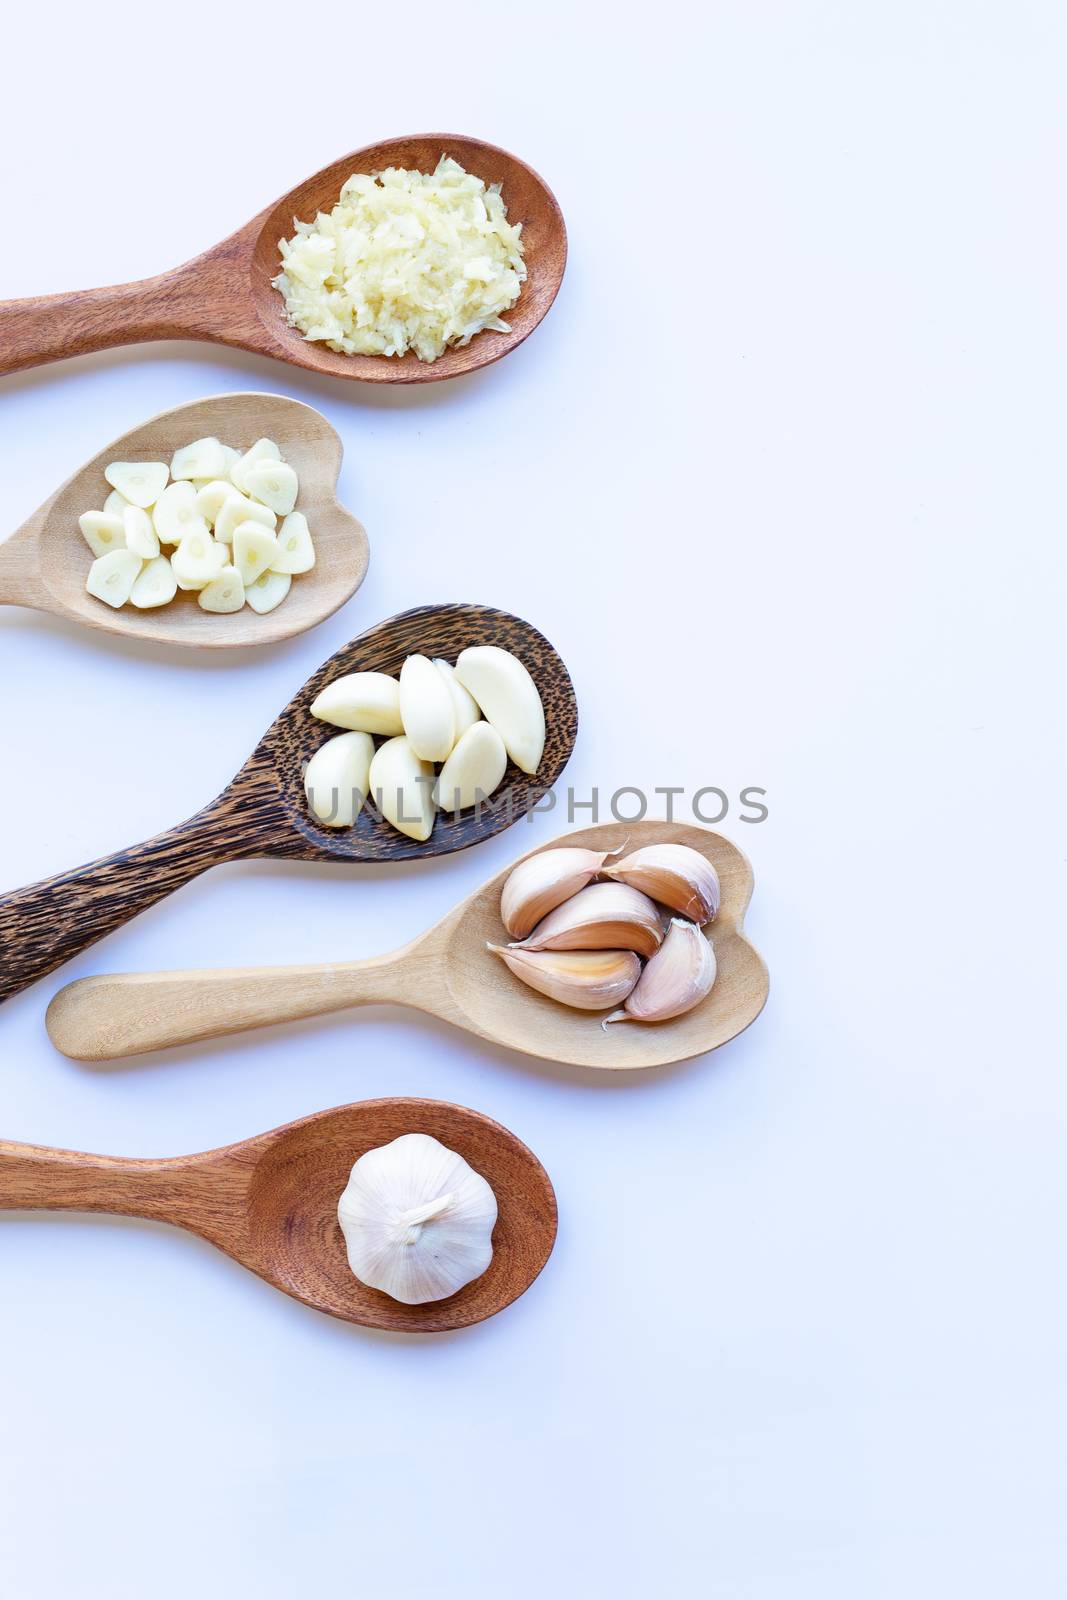 Garlic on wooden spoon on white background.